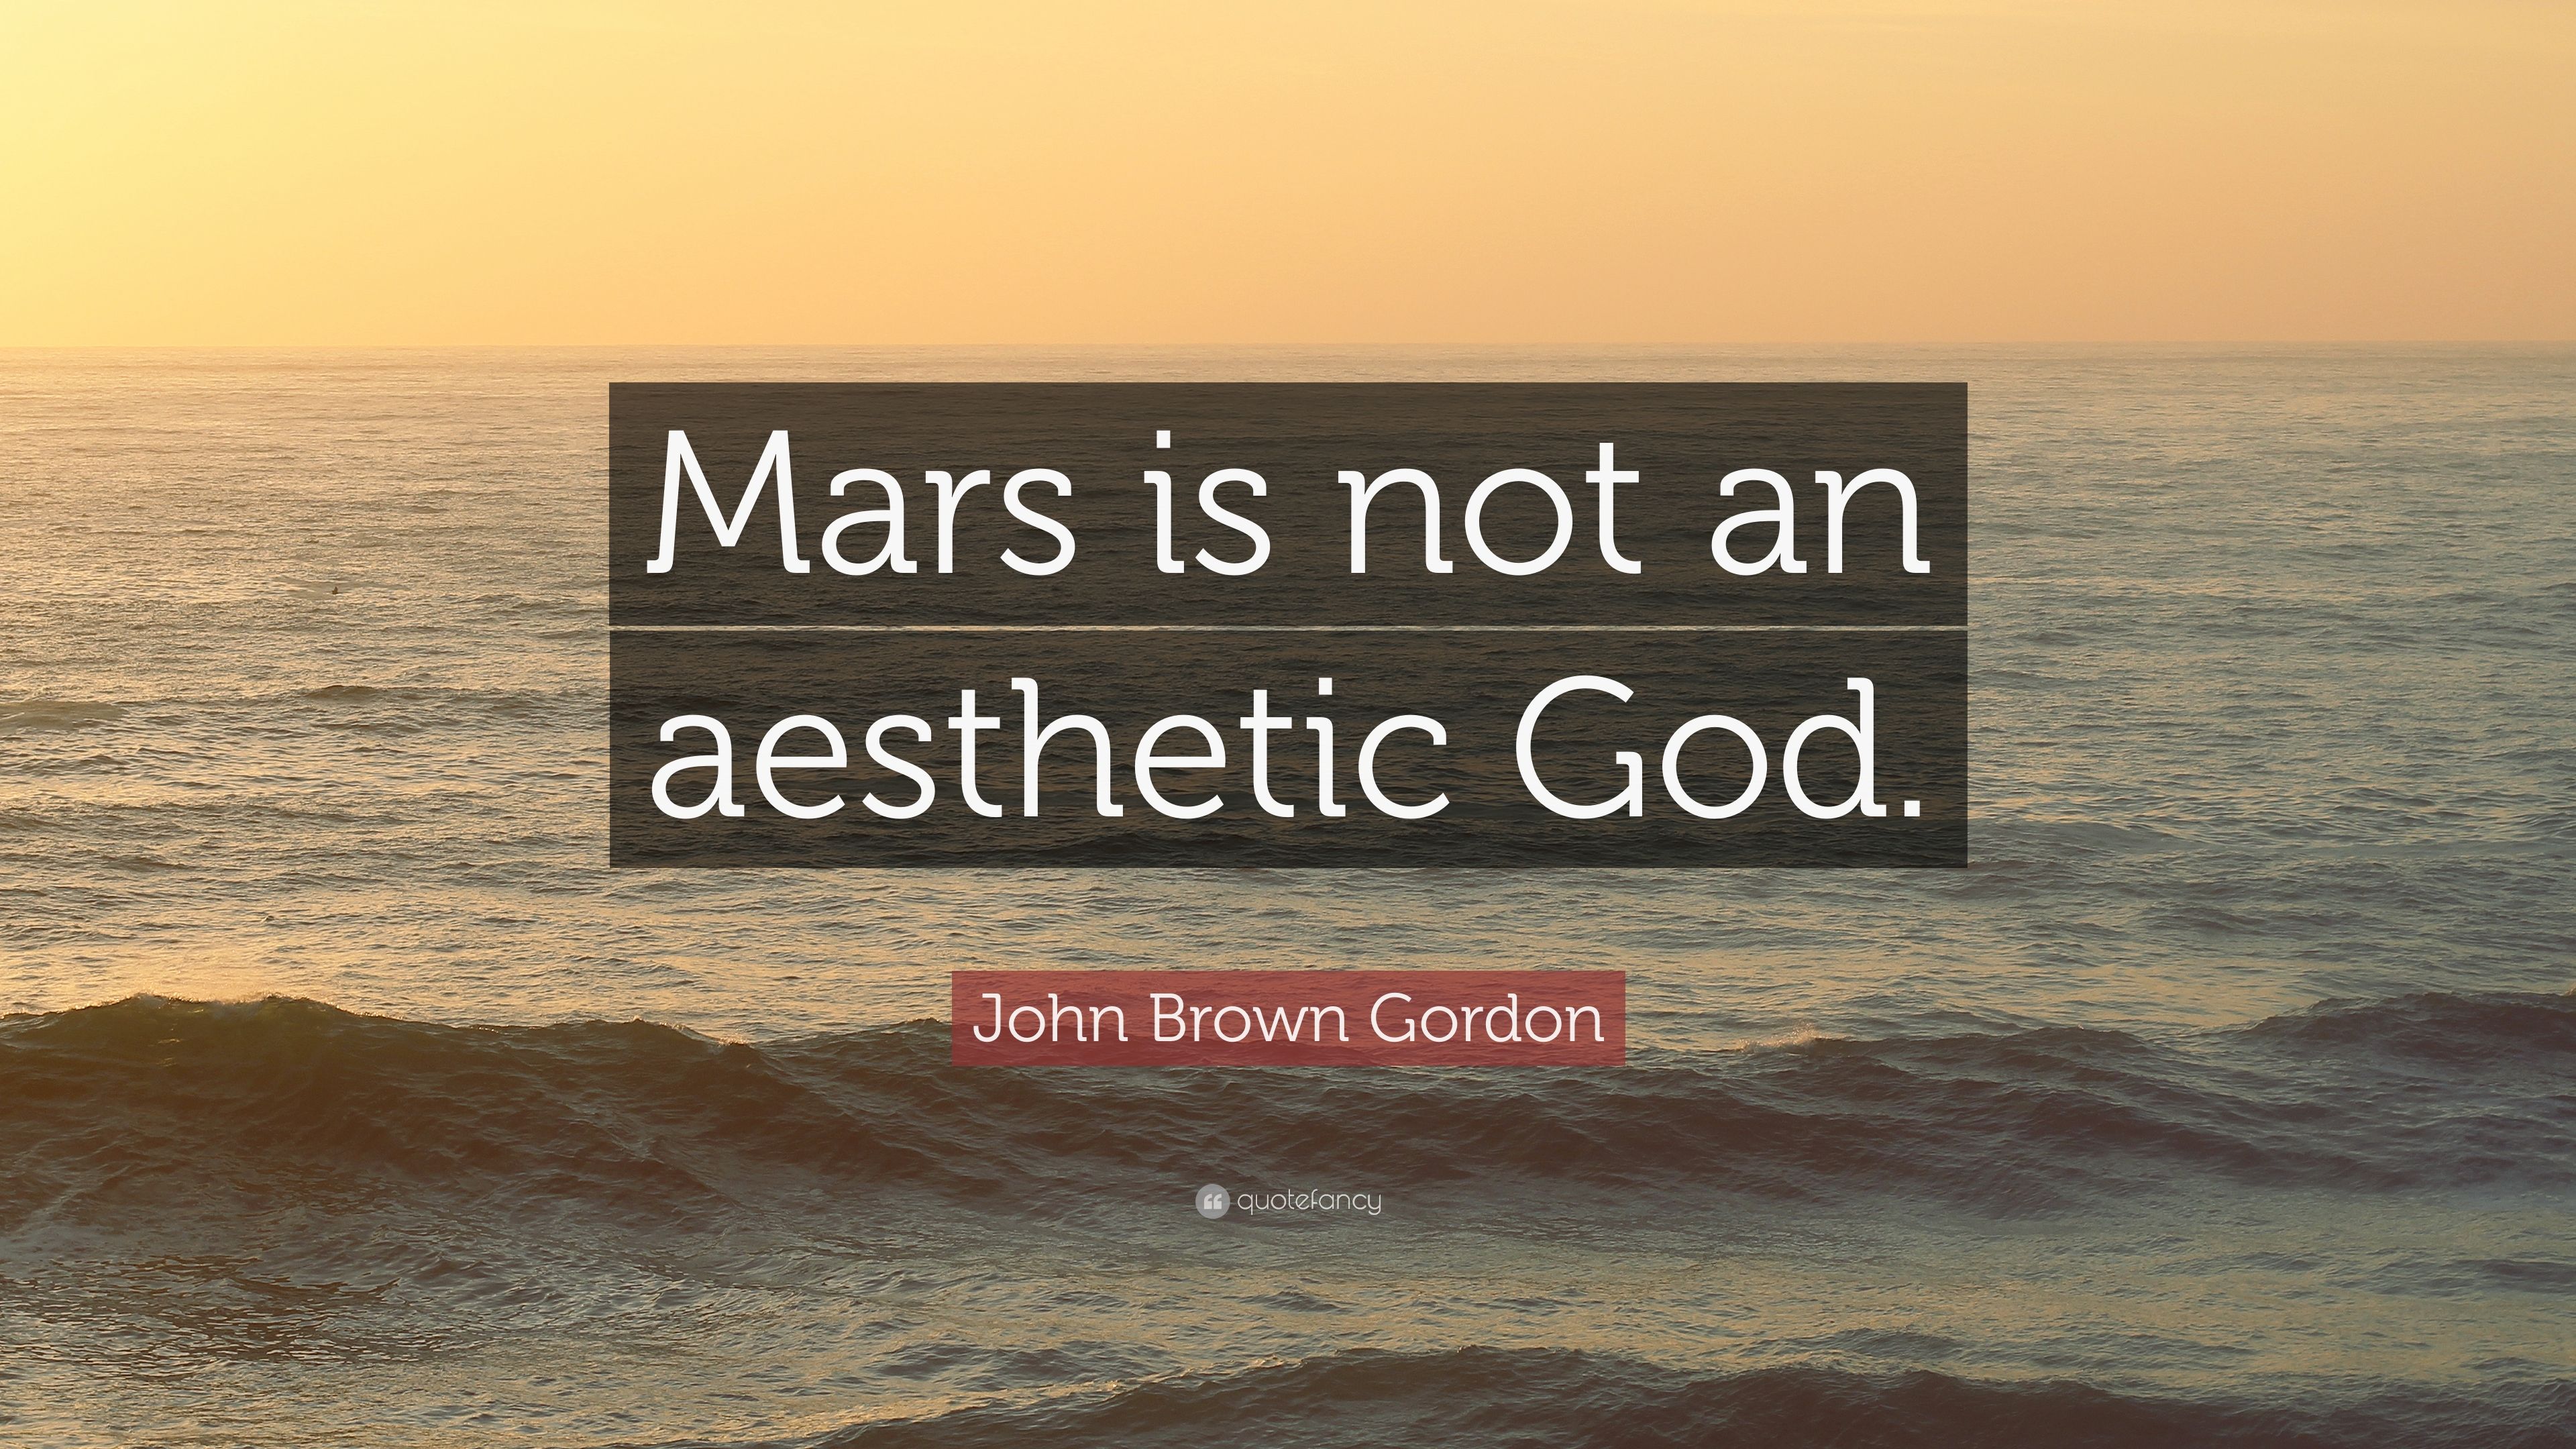 John Brown Gordon Quote: “Mars is not an aesthetic God.”